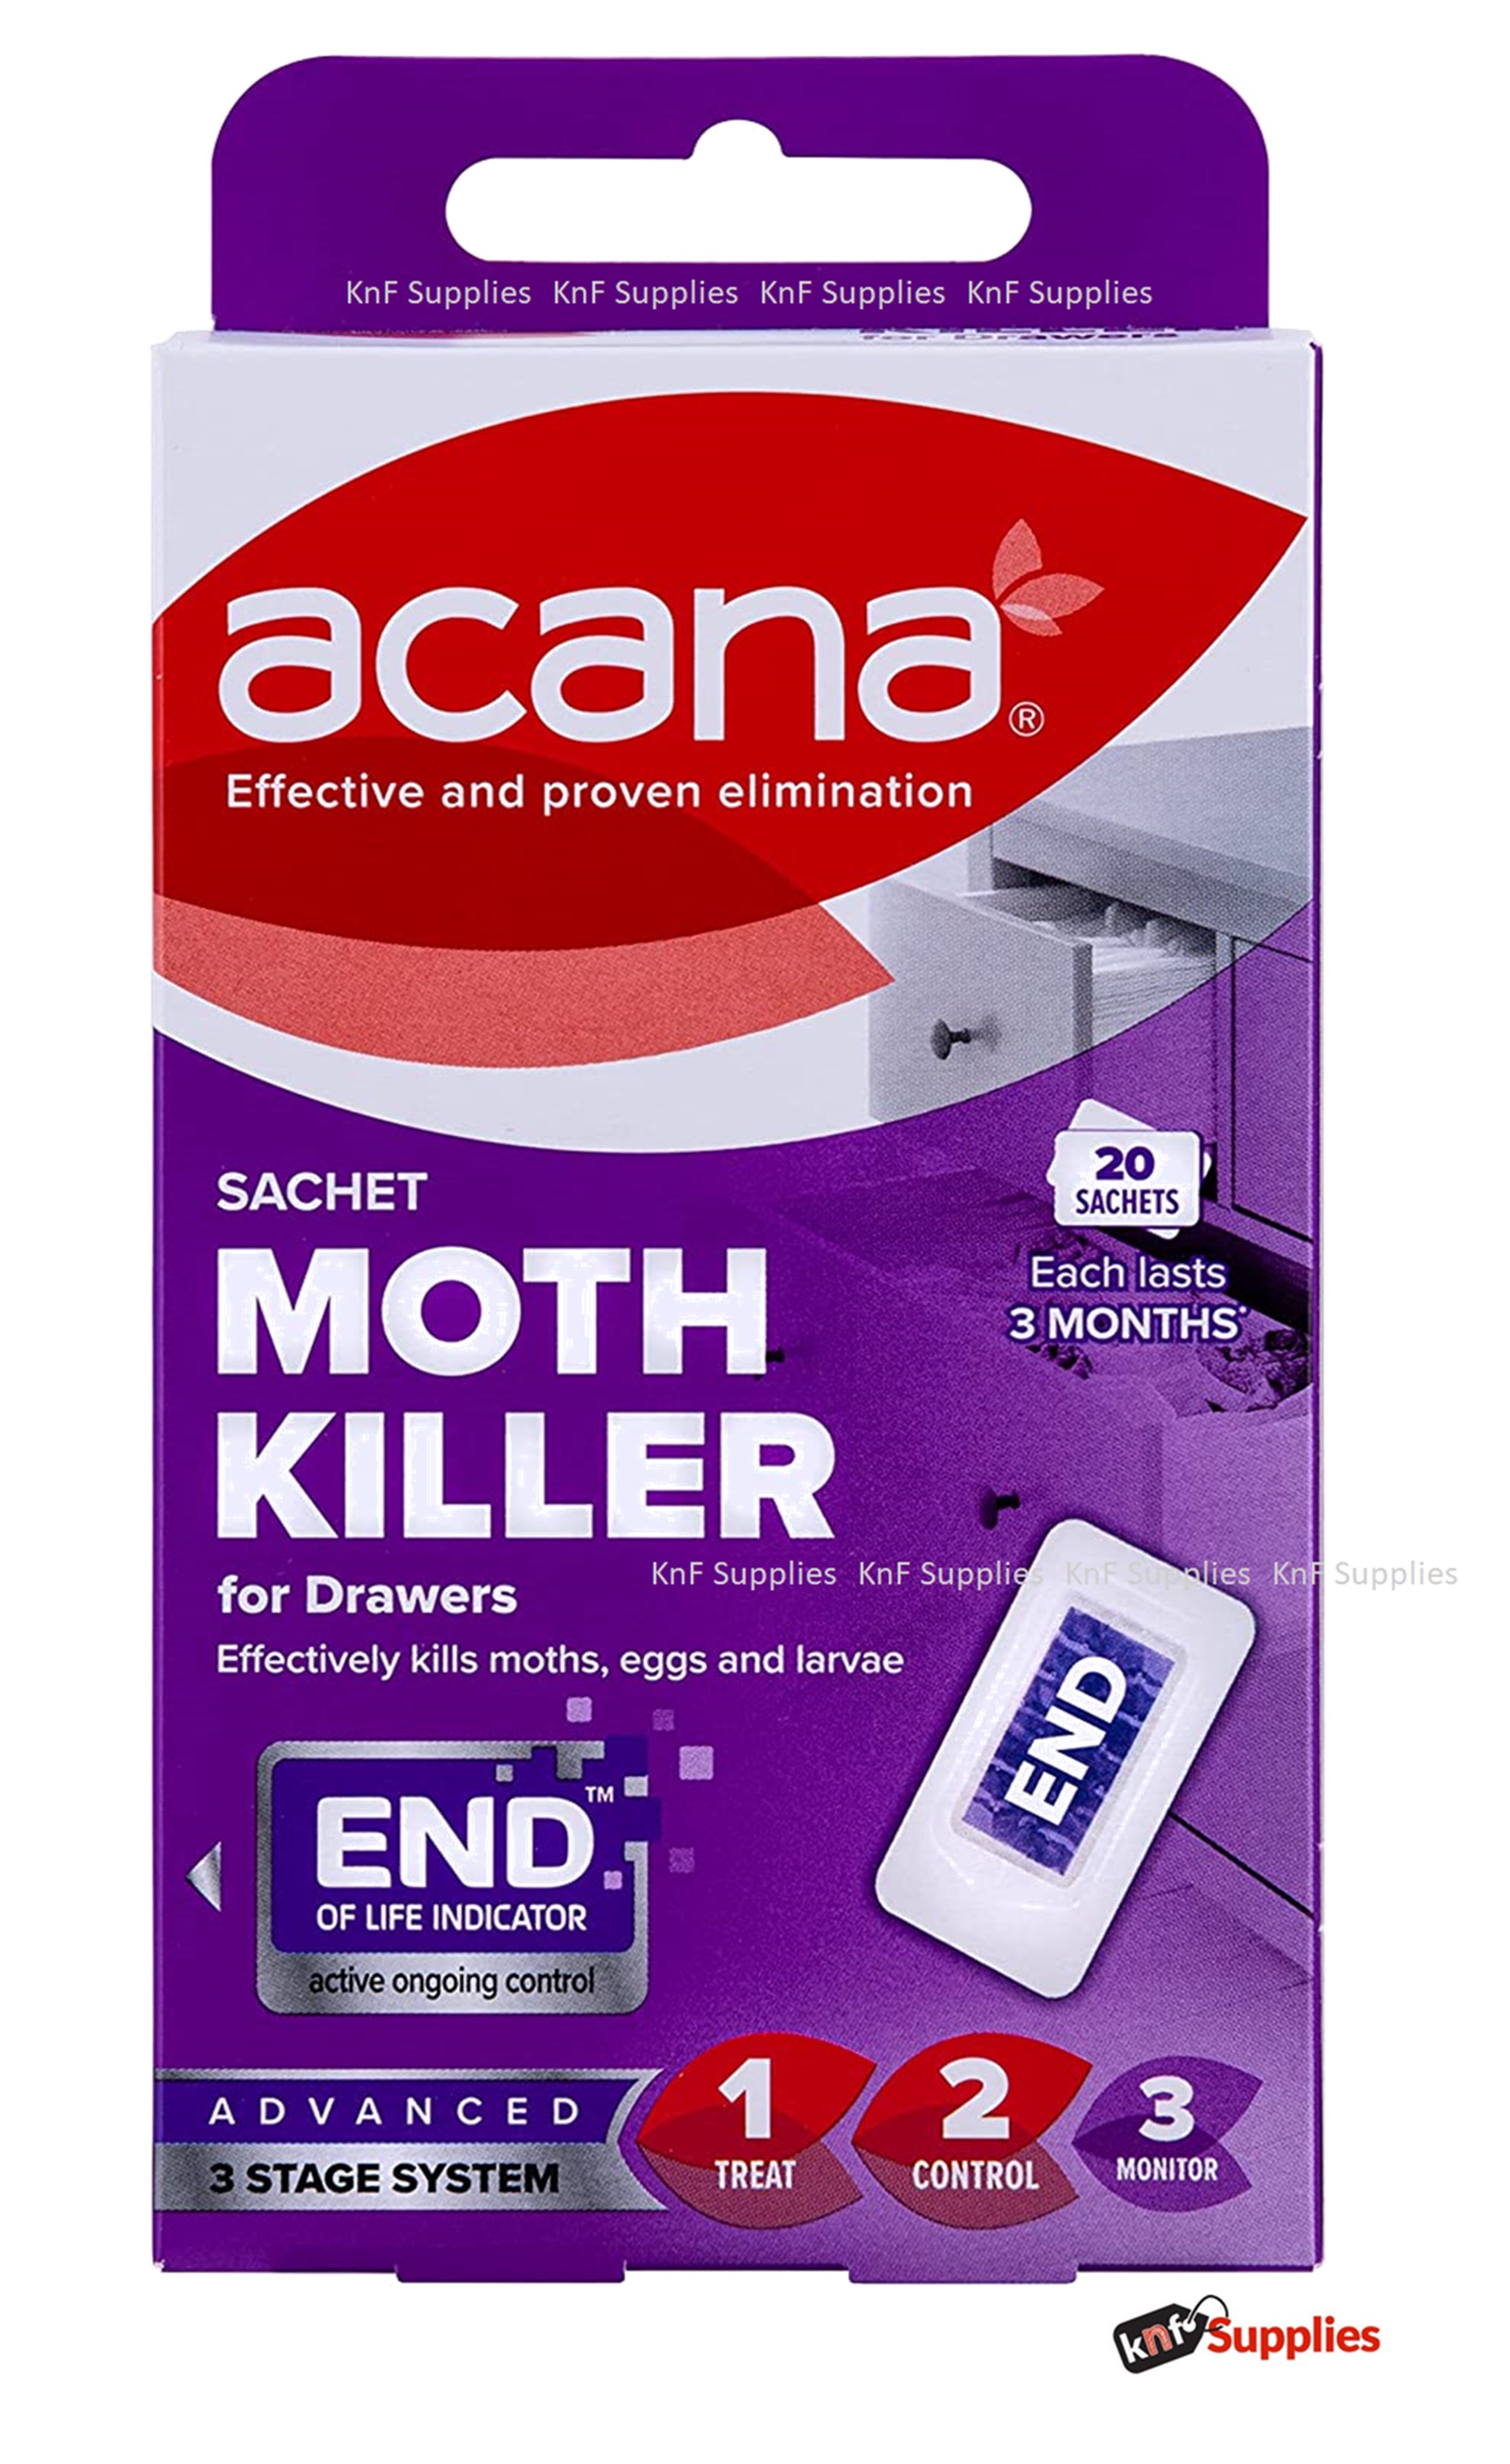 Acana Lavender Sachet Moth Killer Long Lastin Protection Eggs And Larvae Draws 